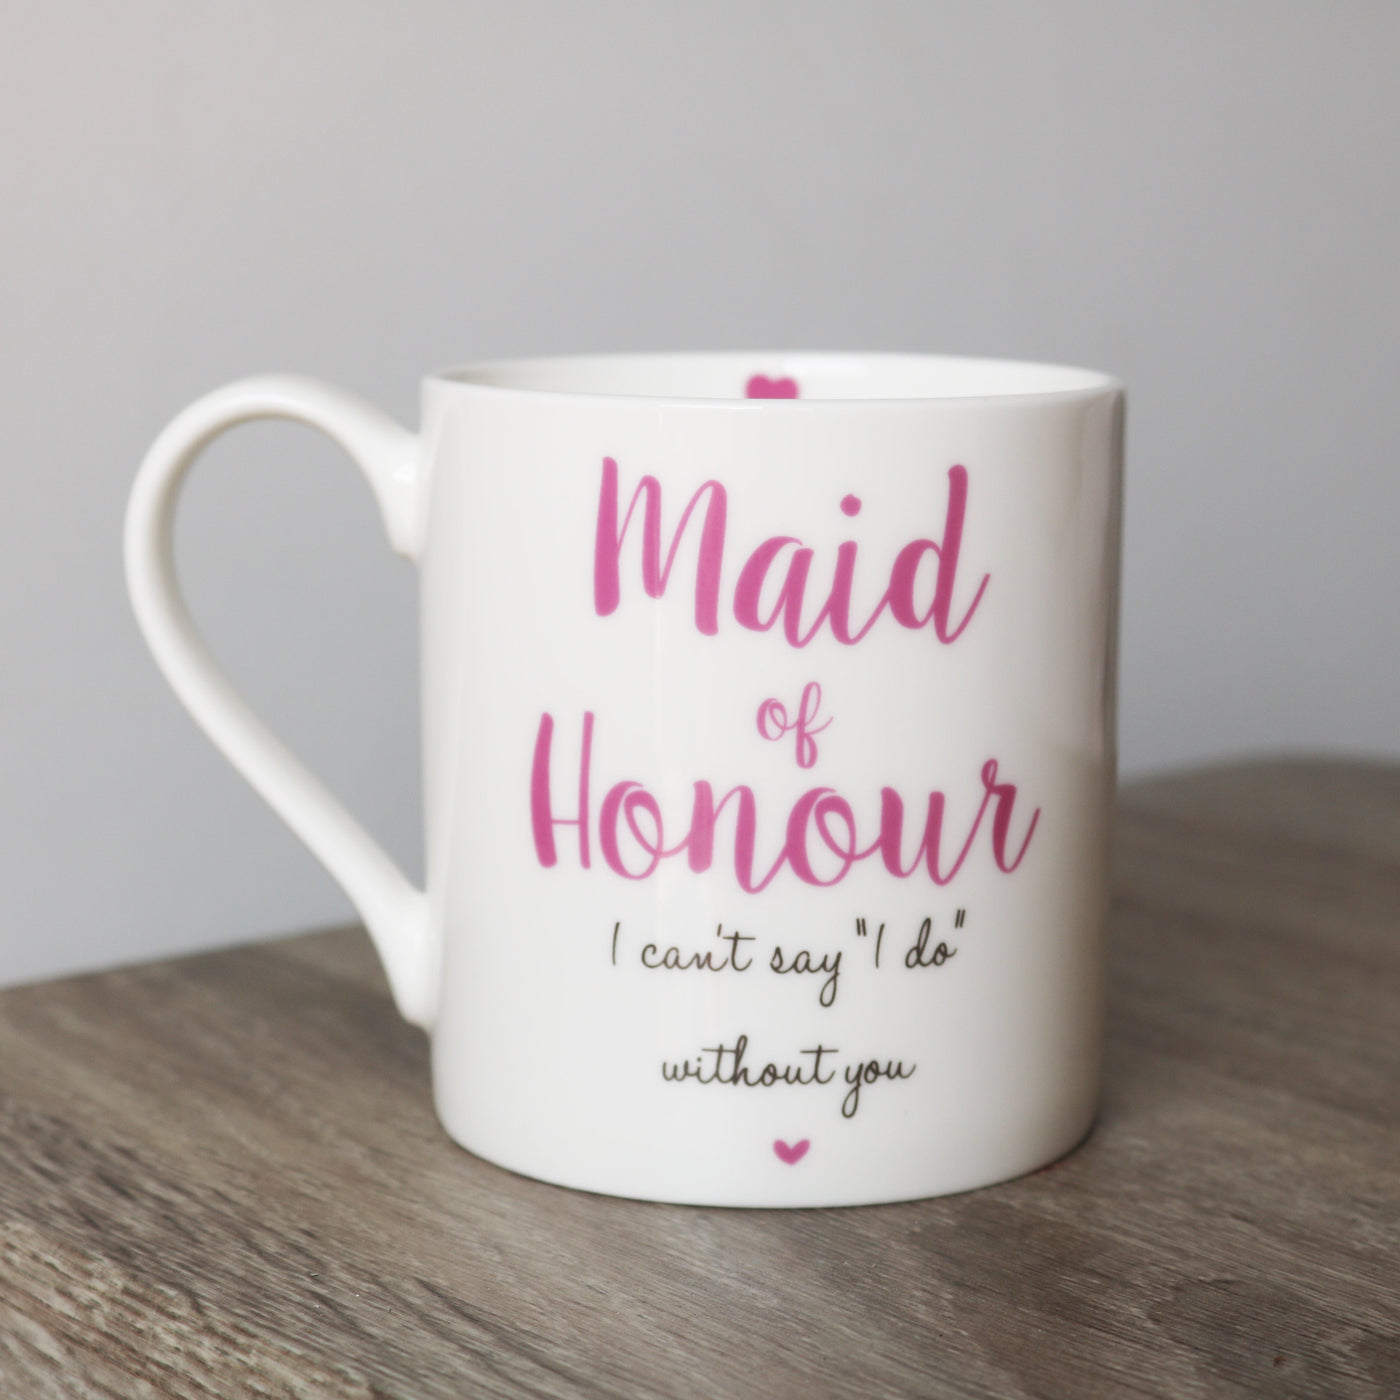 Maid of honour mug